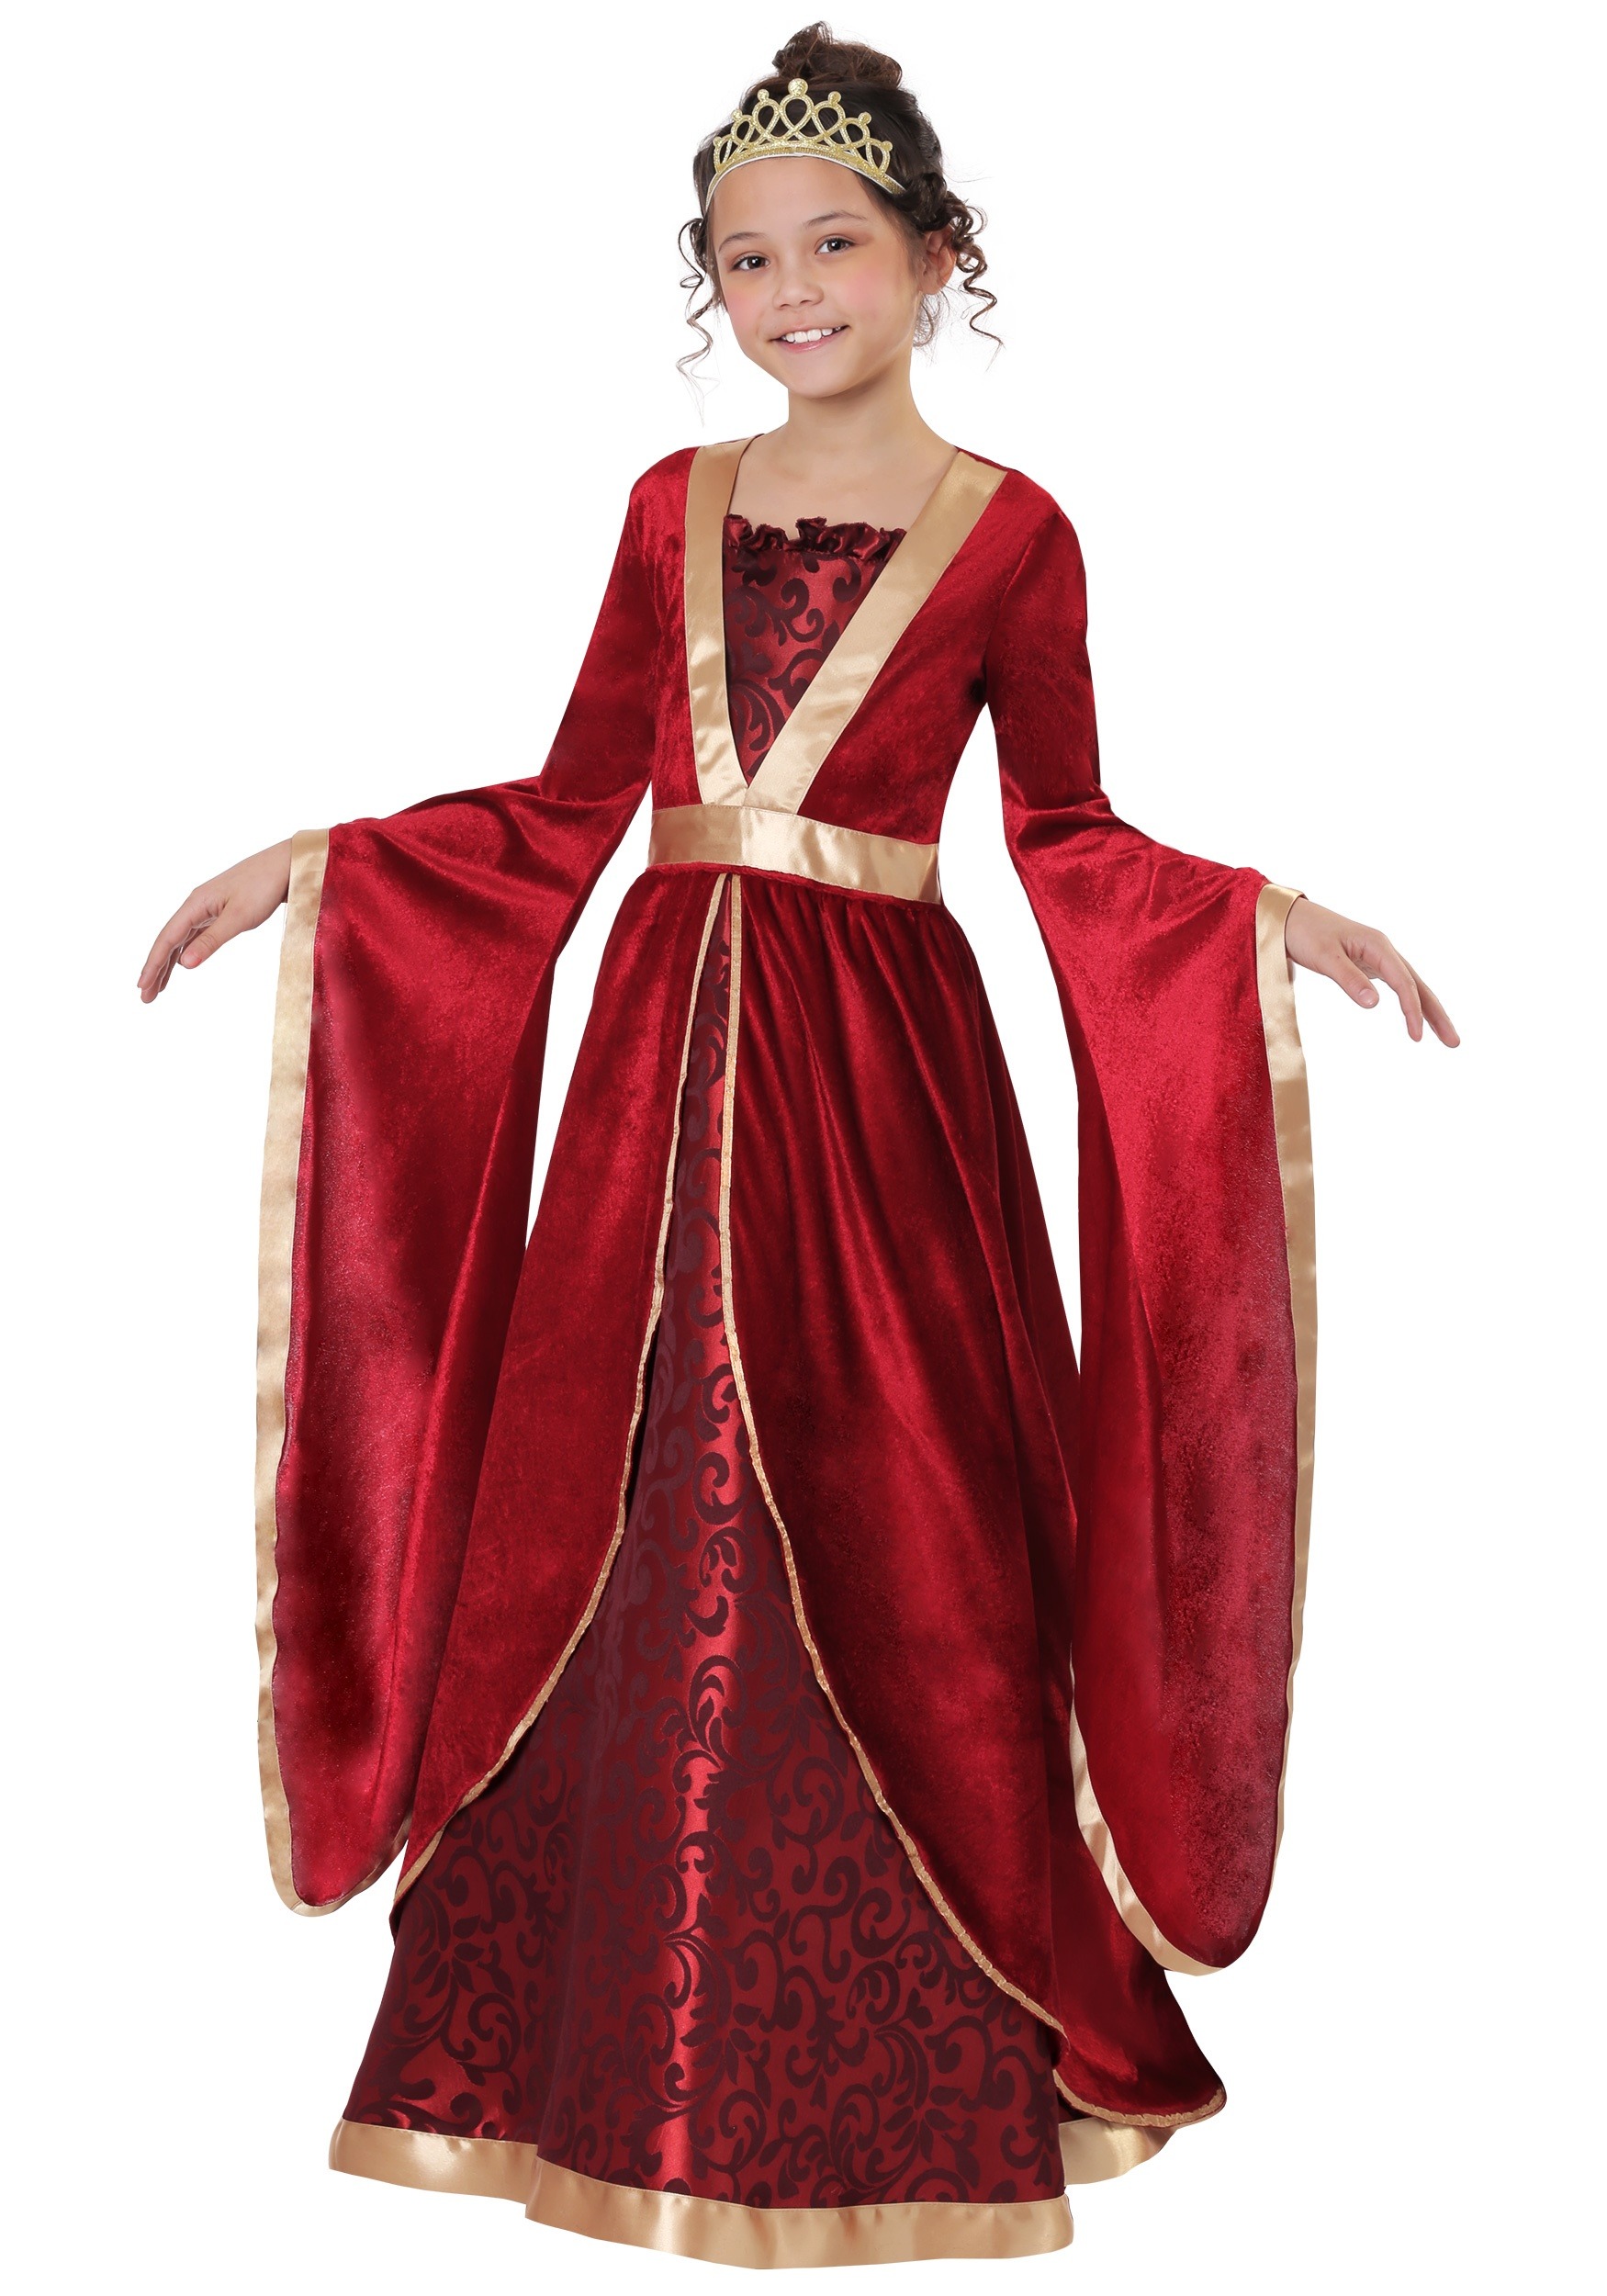 Photos - Fancy Dress FUN Costumes Renaissance Maiden Girl's Costume Dress | Historical Costumes